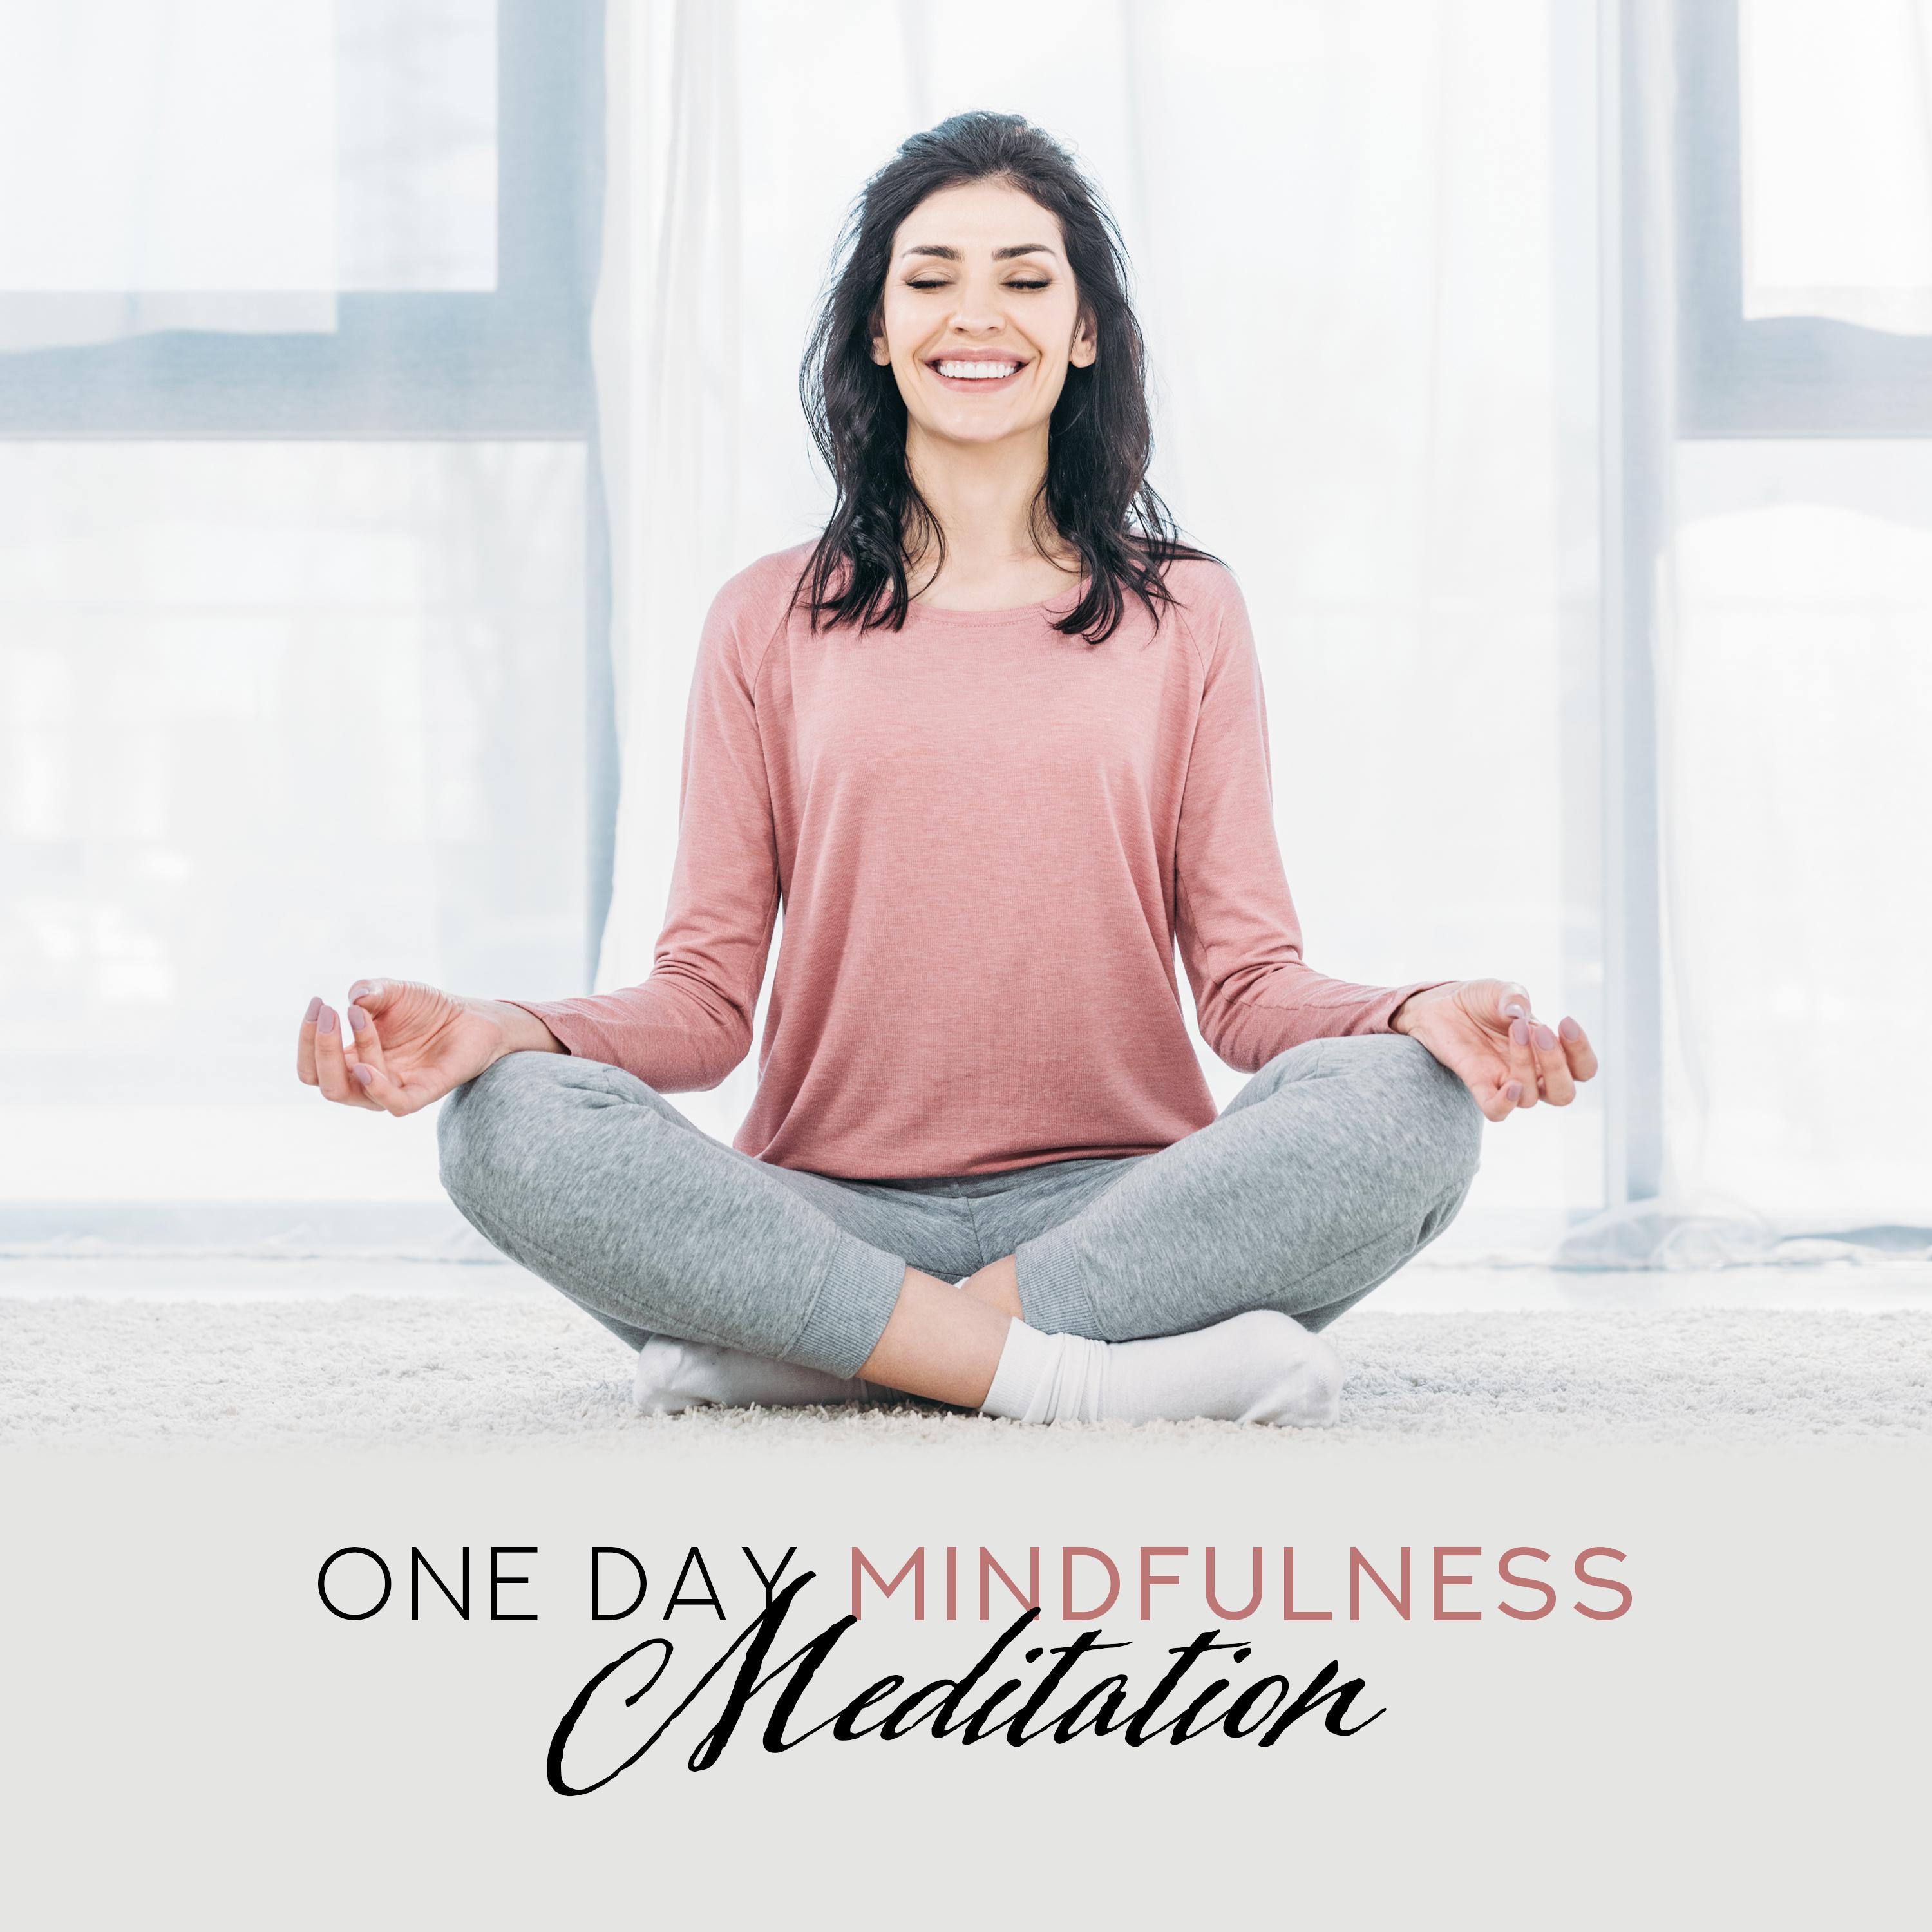 One Day Mindfulness Meditation (Focus, Calm, Balance)